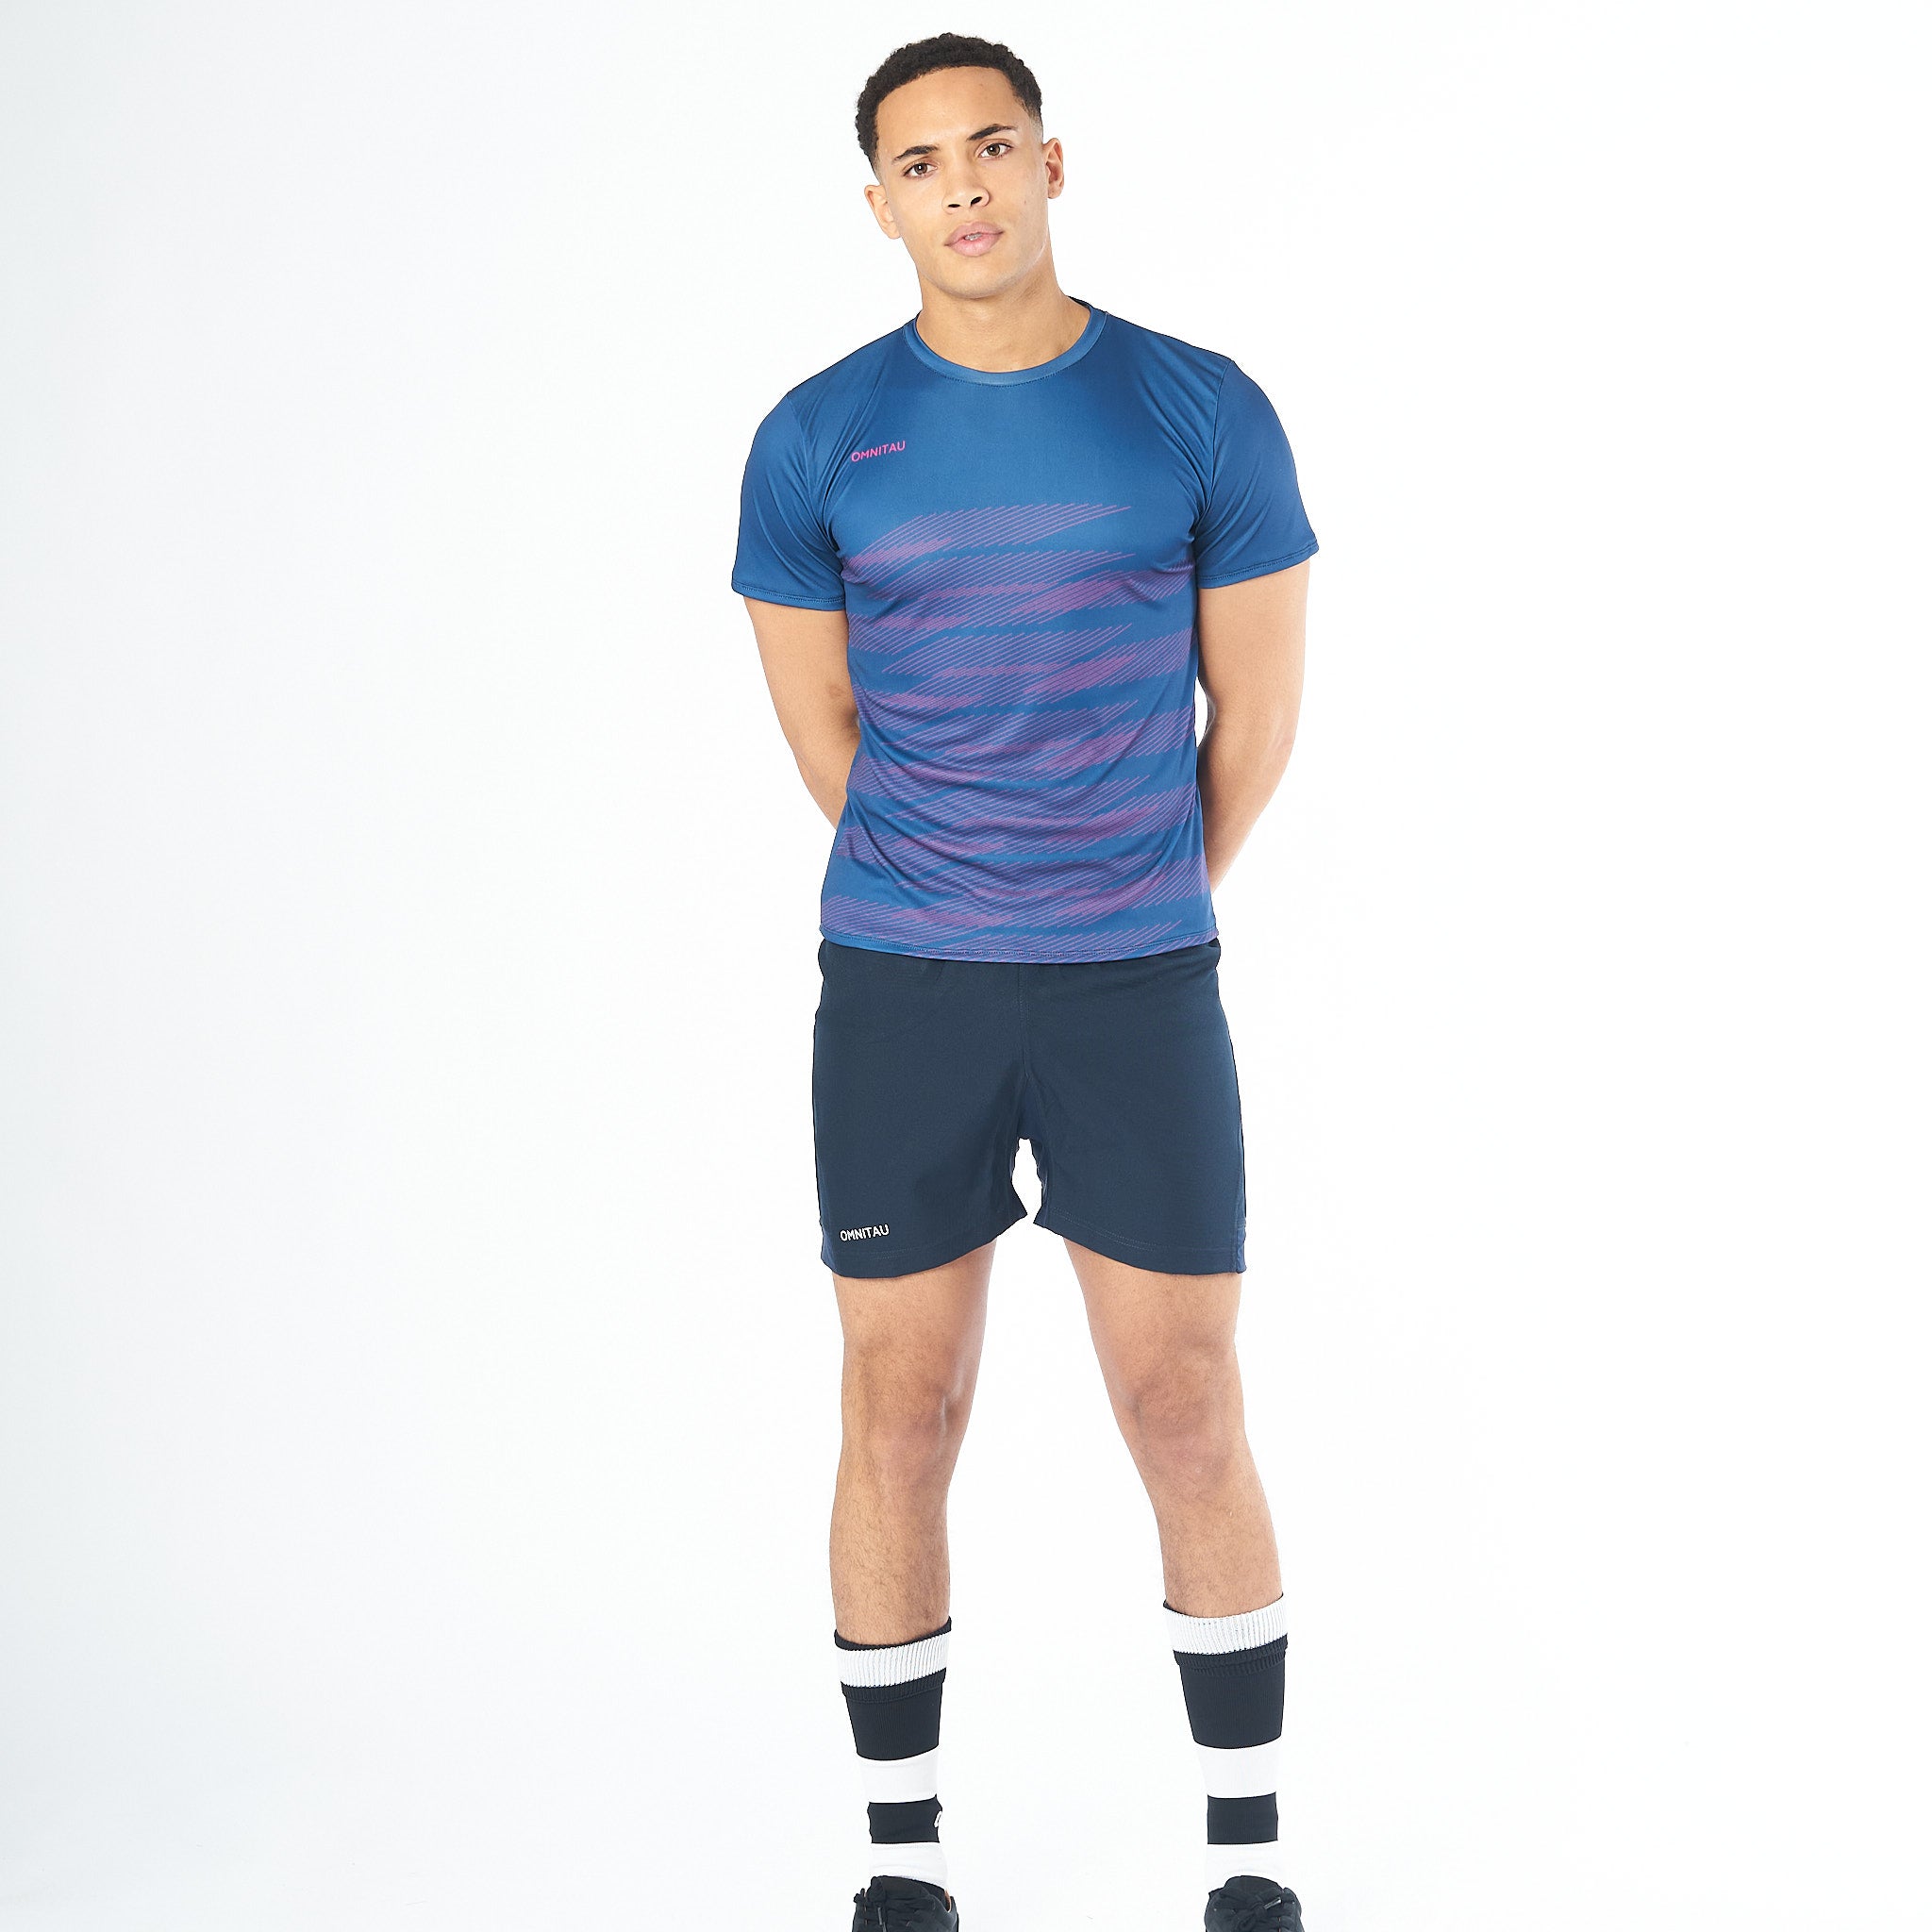 Omnitau Men's Team Sports Breathable Rugby Shorts - Navy